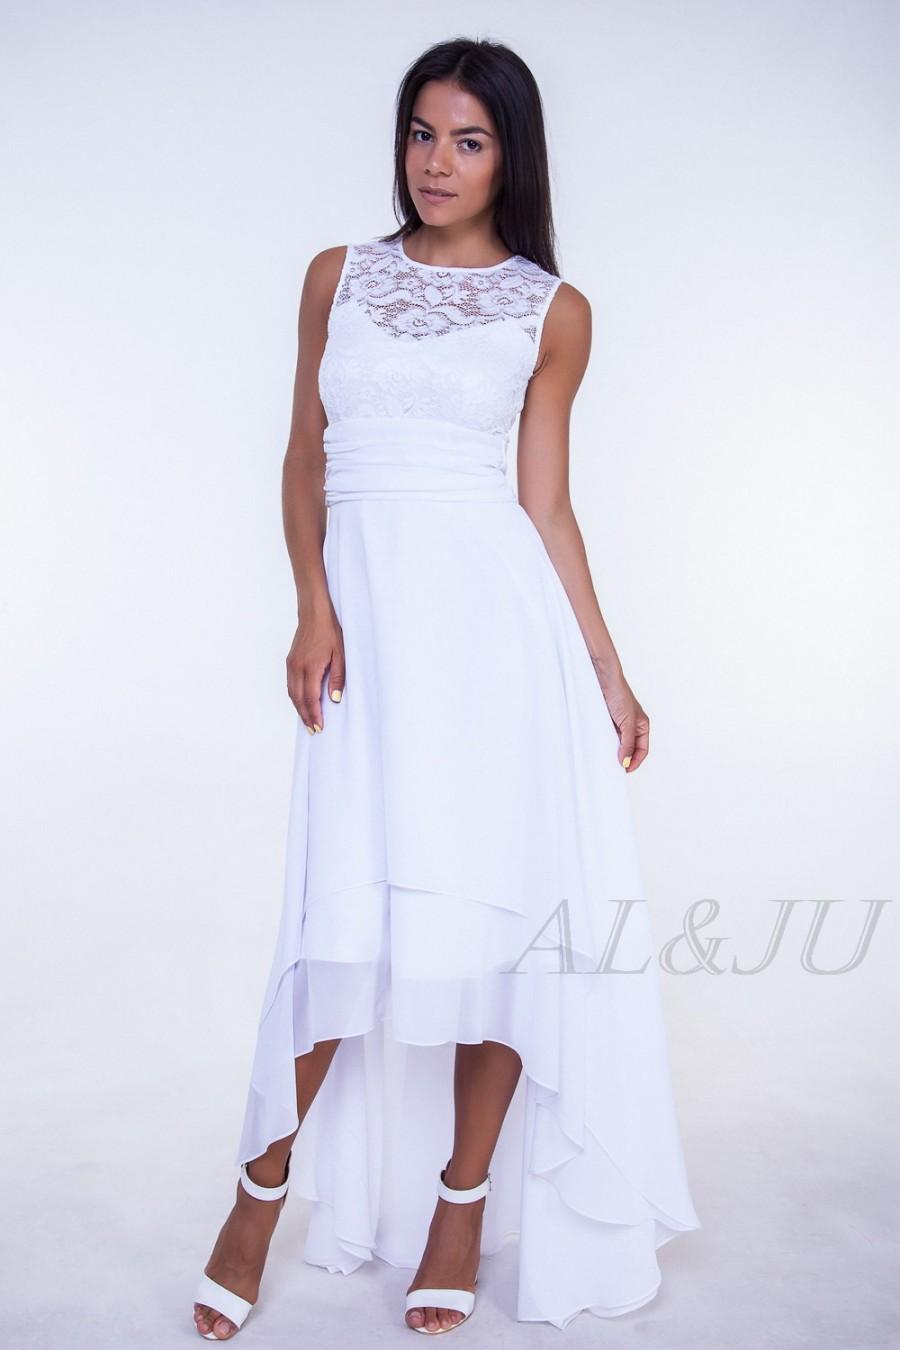 زفاف - Long white dress Wedding lace and chiffon gown Long dress bridesmaid.